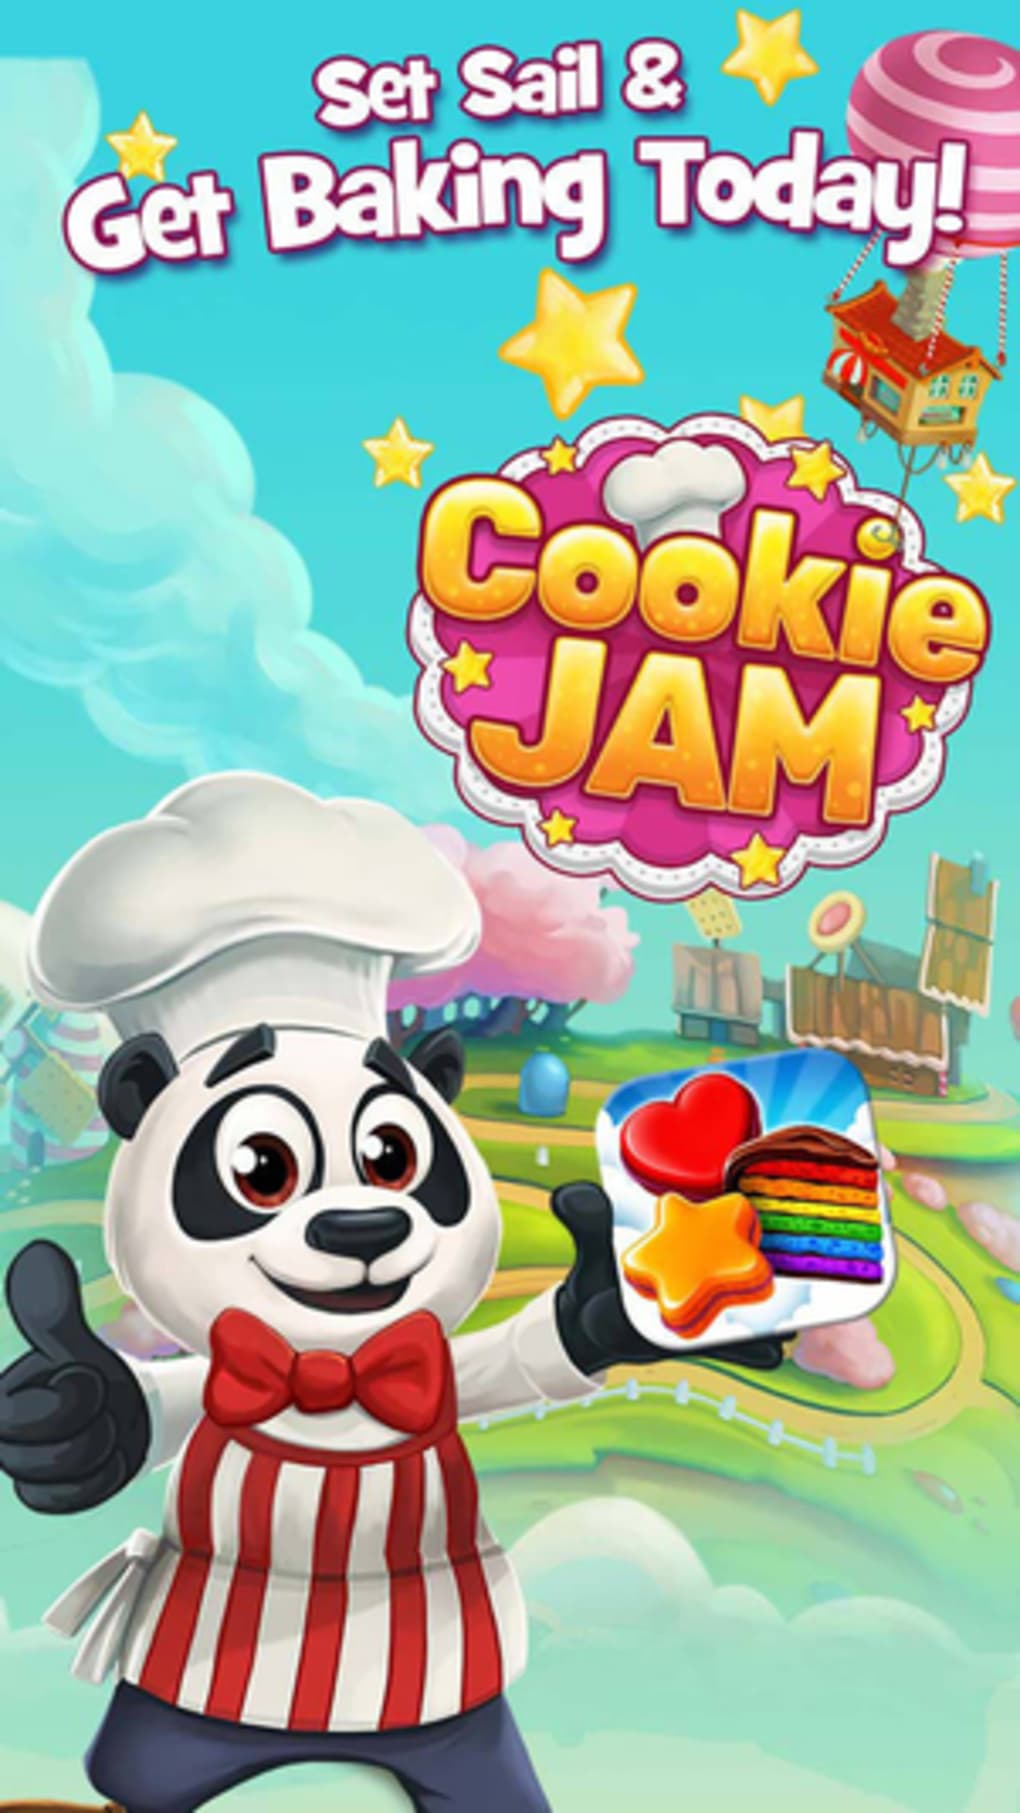 Cookie jam - bastaworldwide